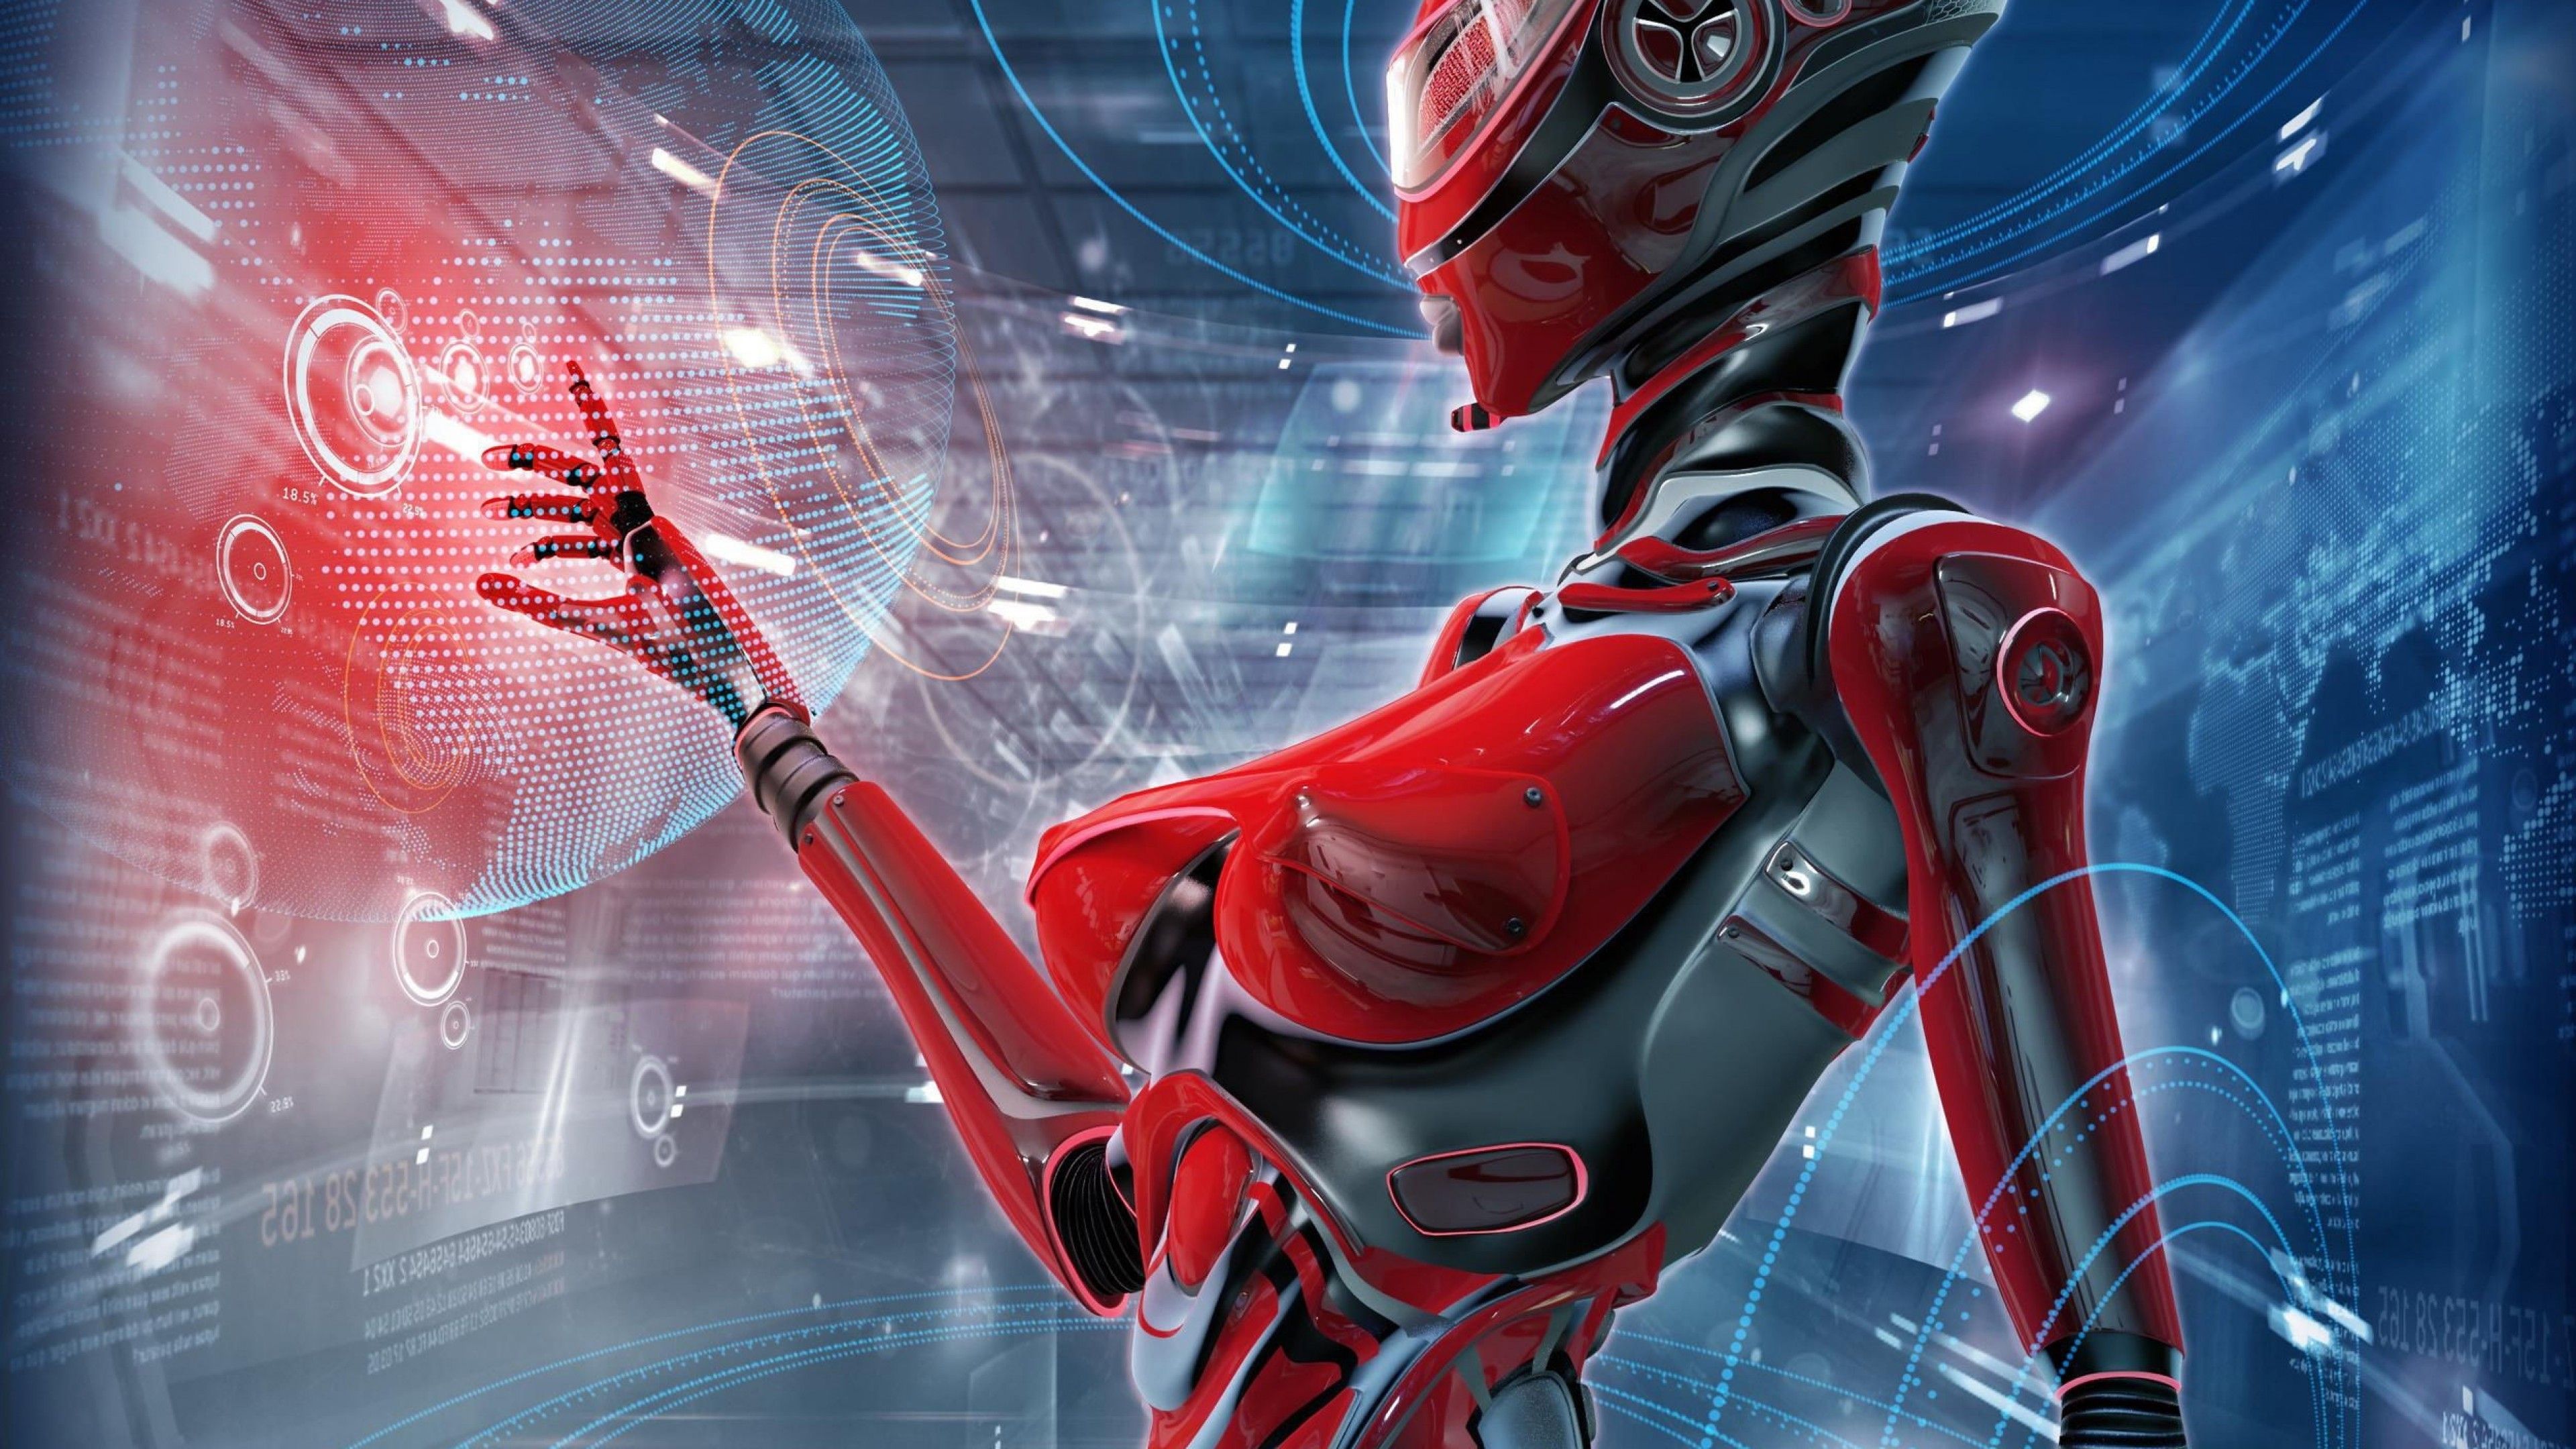 Download 3840x2160 Robot, Sci Fi, Skills, High Tech, Cyborg Wallpaper For UHD TV